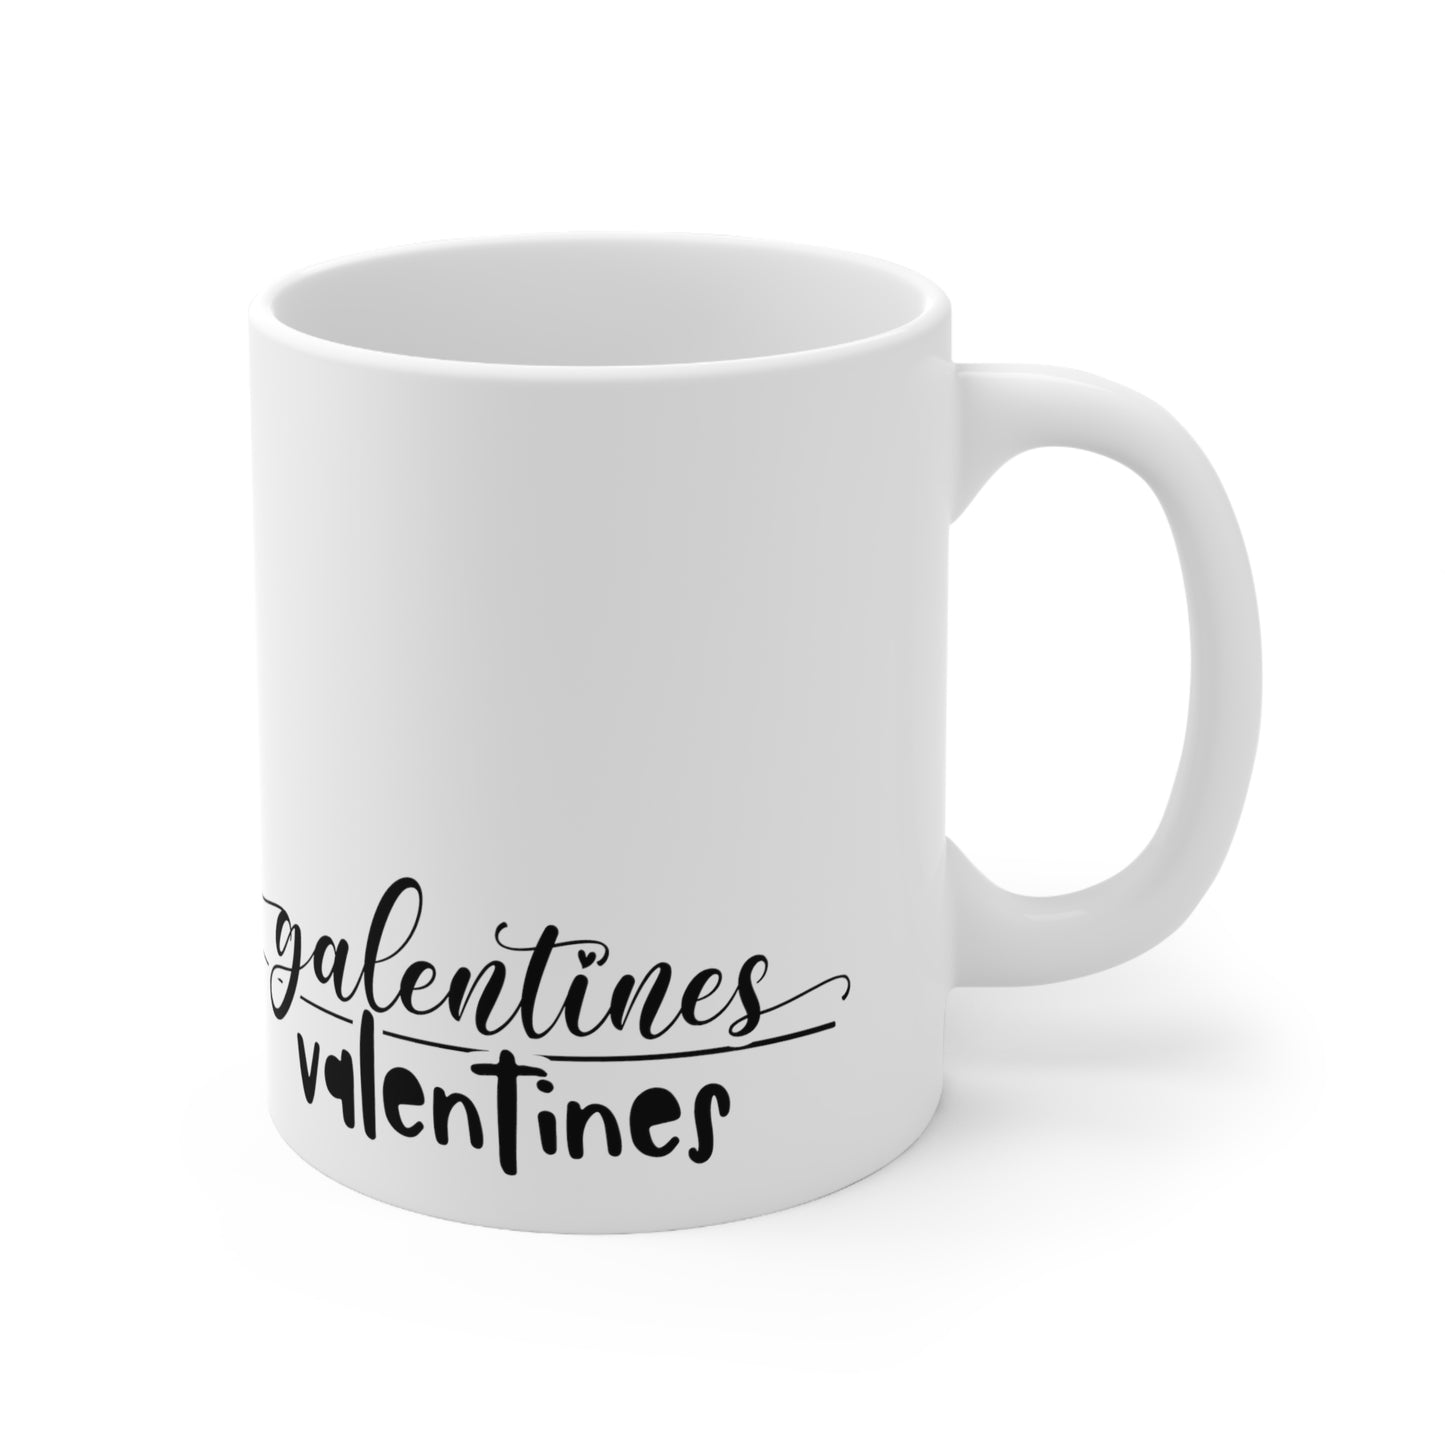 Galentines Over Valentines Ceramic Mug 11oz